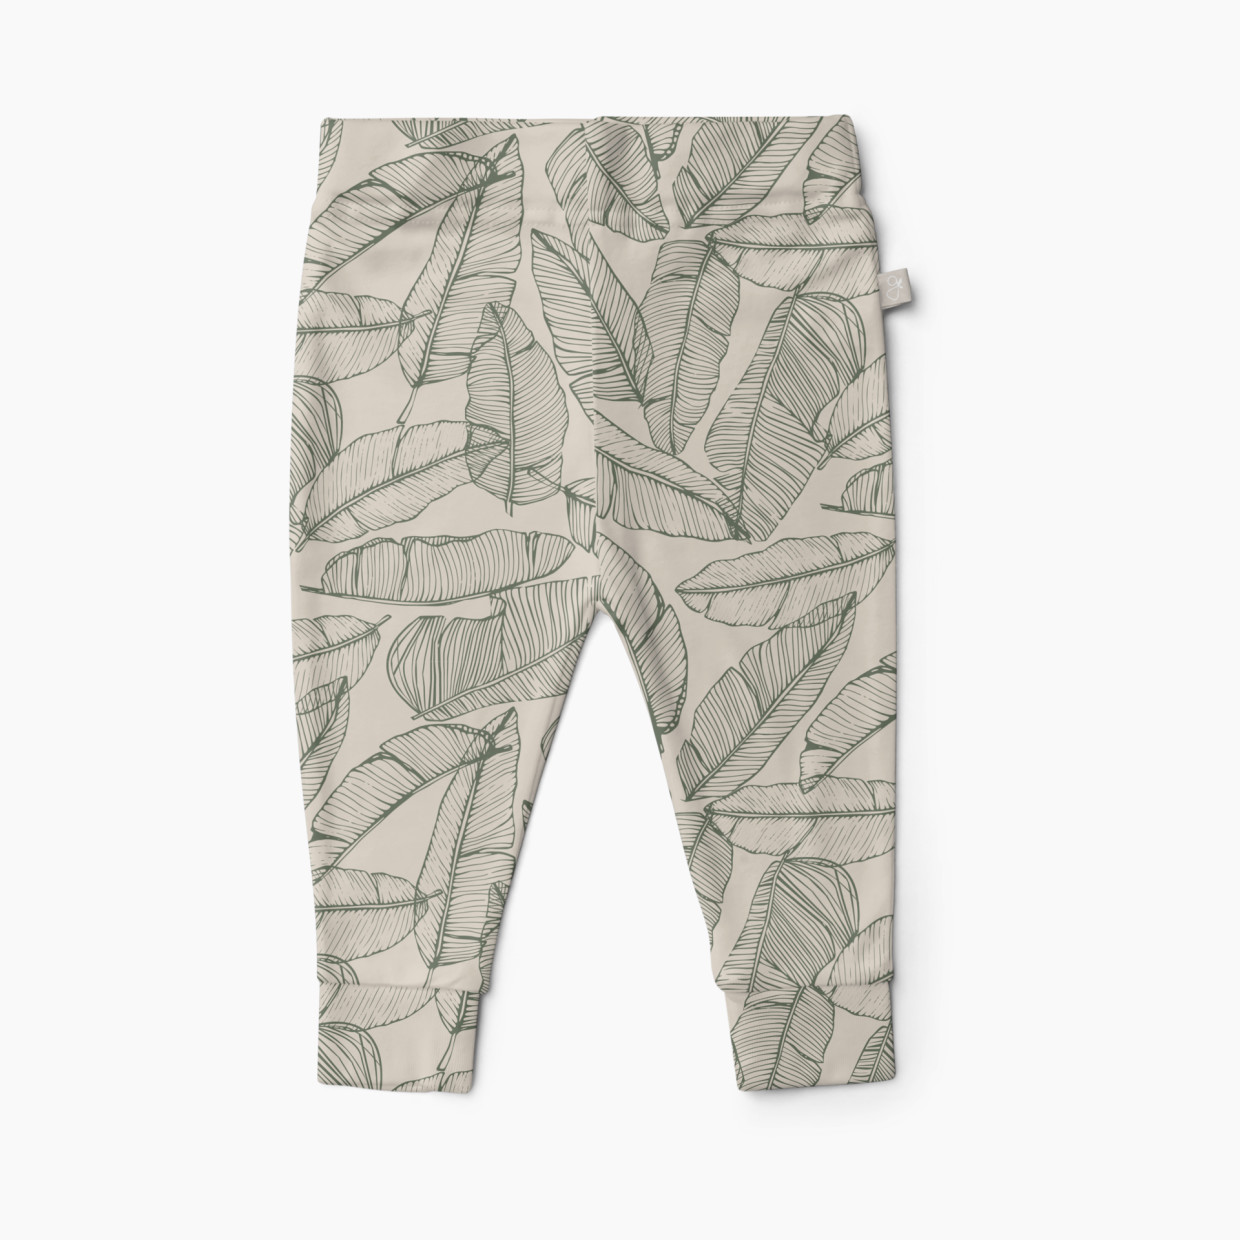 Goumi Kids x Babylist Baby Pants - Banana Leaf, 3-6 M.